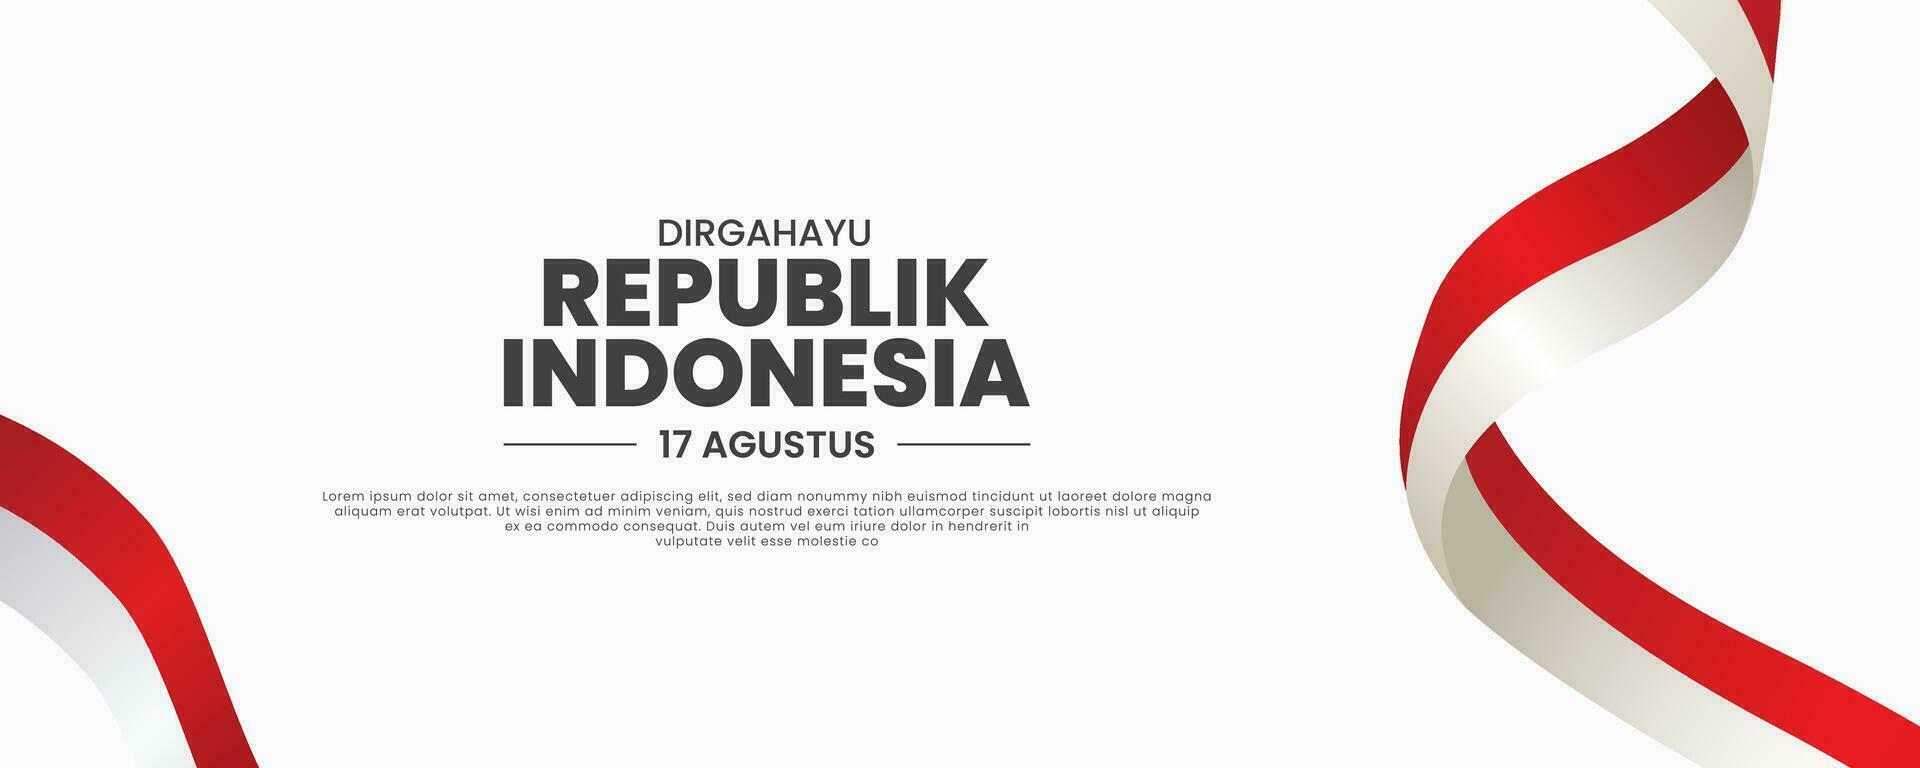 dirgahayu republik Indonesië. onafhankelijkheid dag banier sociaal media post sjabloon. vector